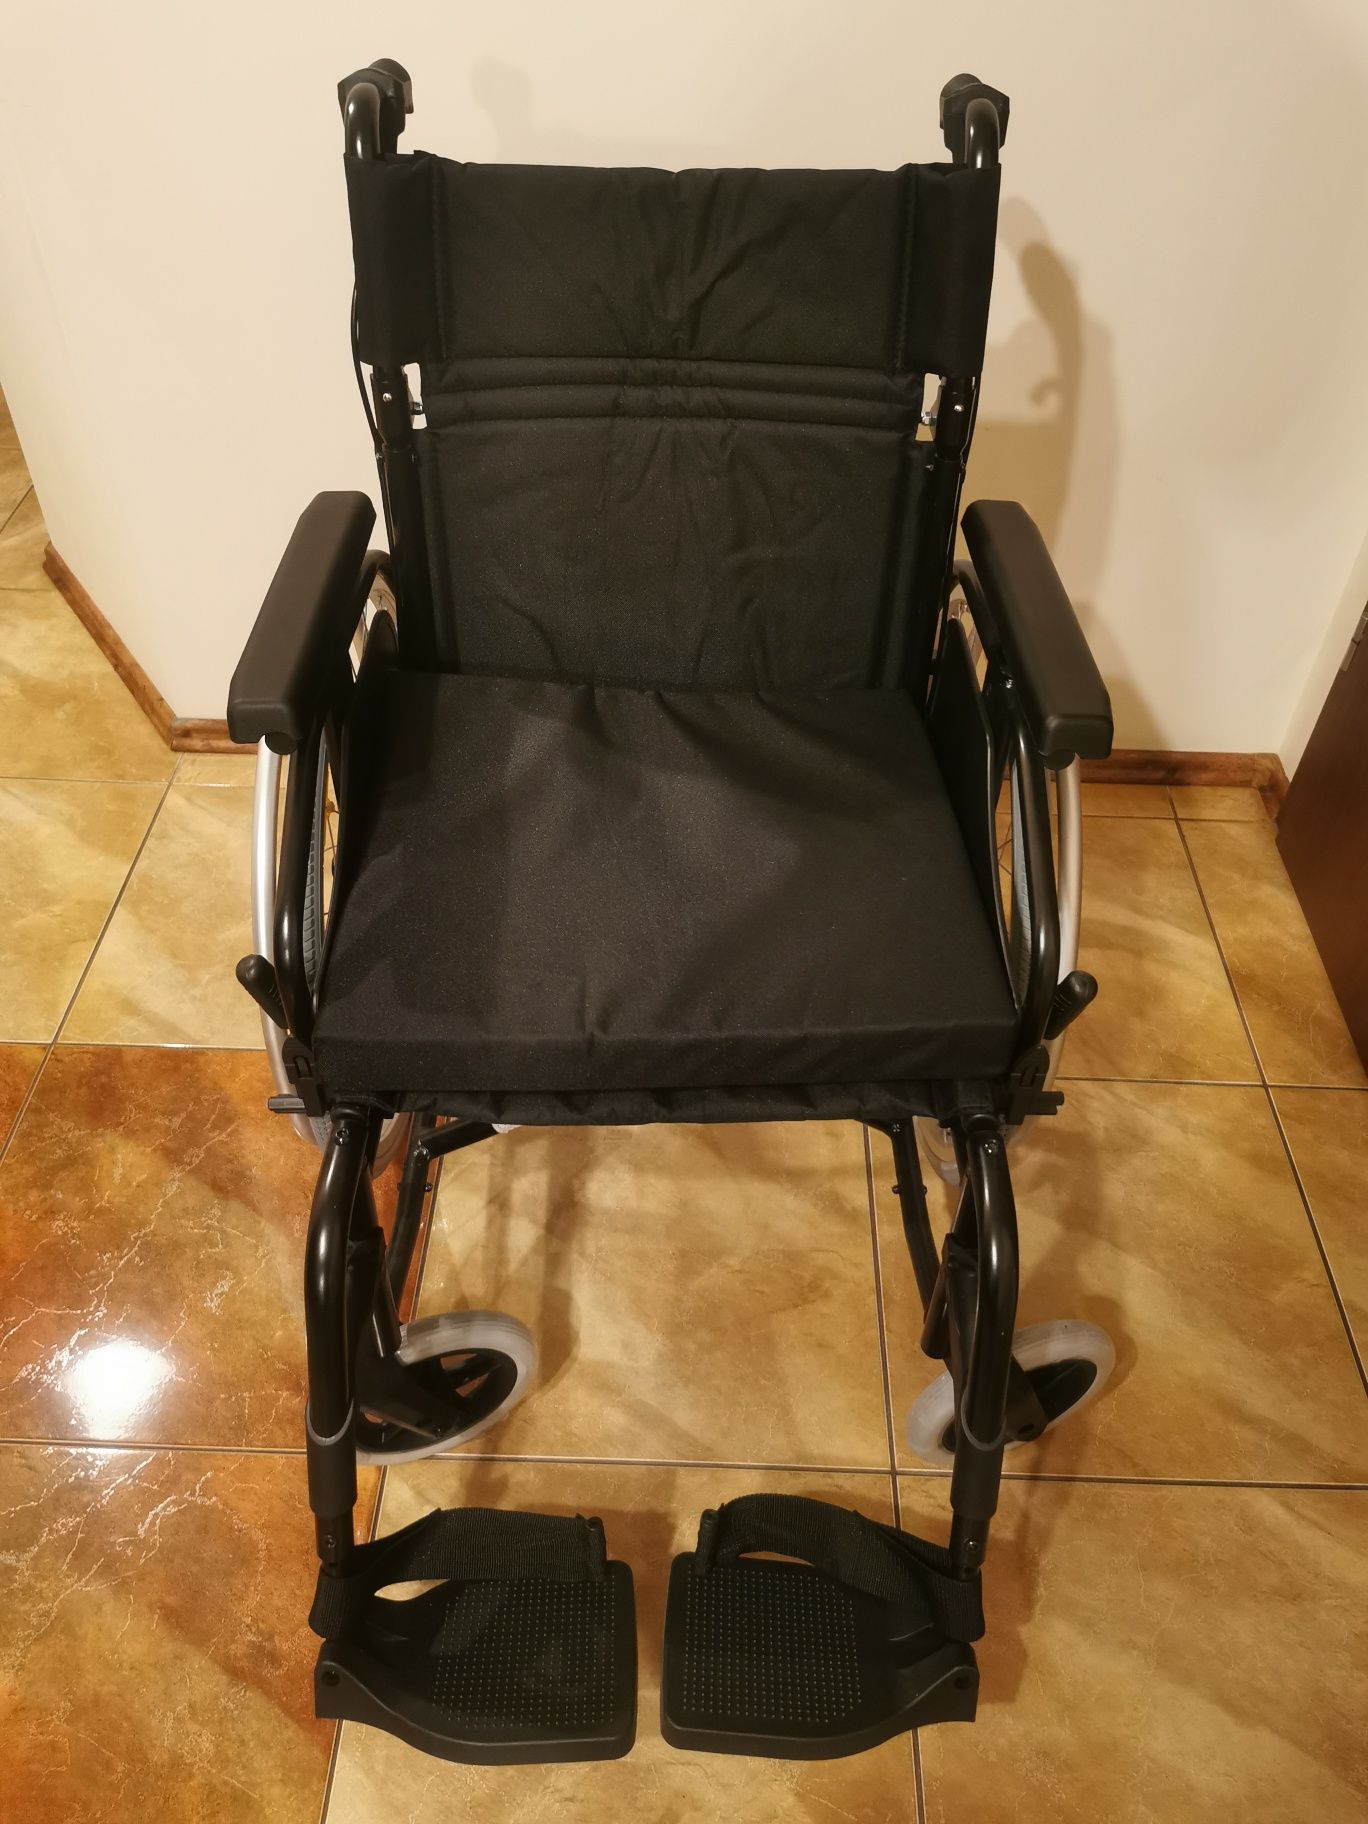 NOWY aluminowy wózek inwalidzki Cruiser Active RF3